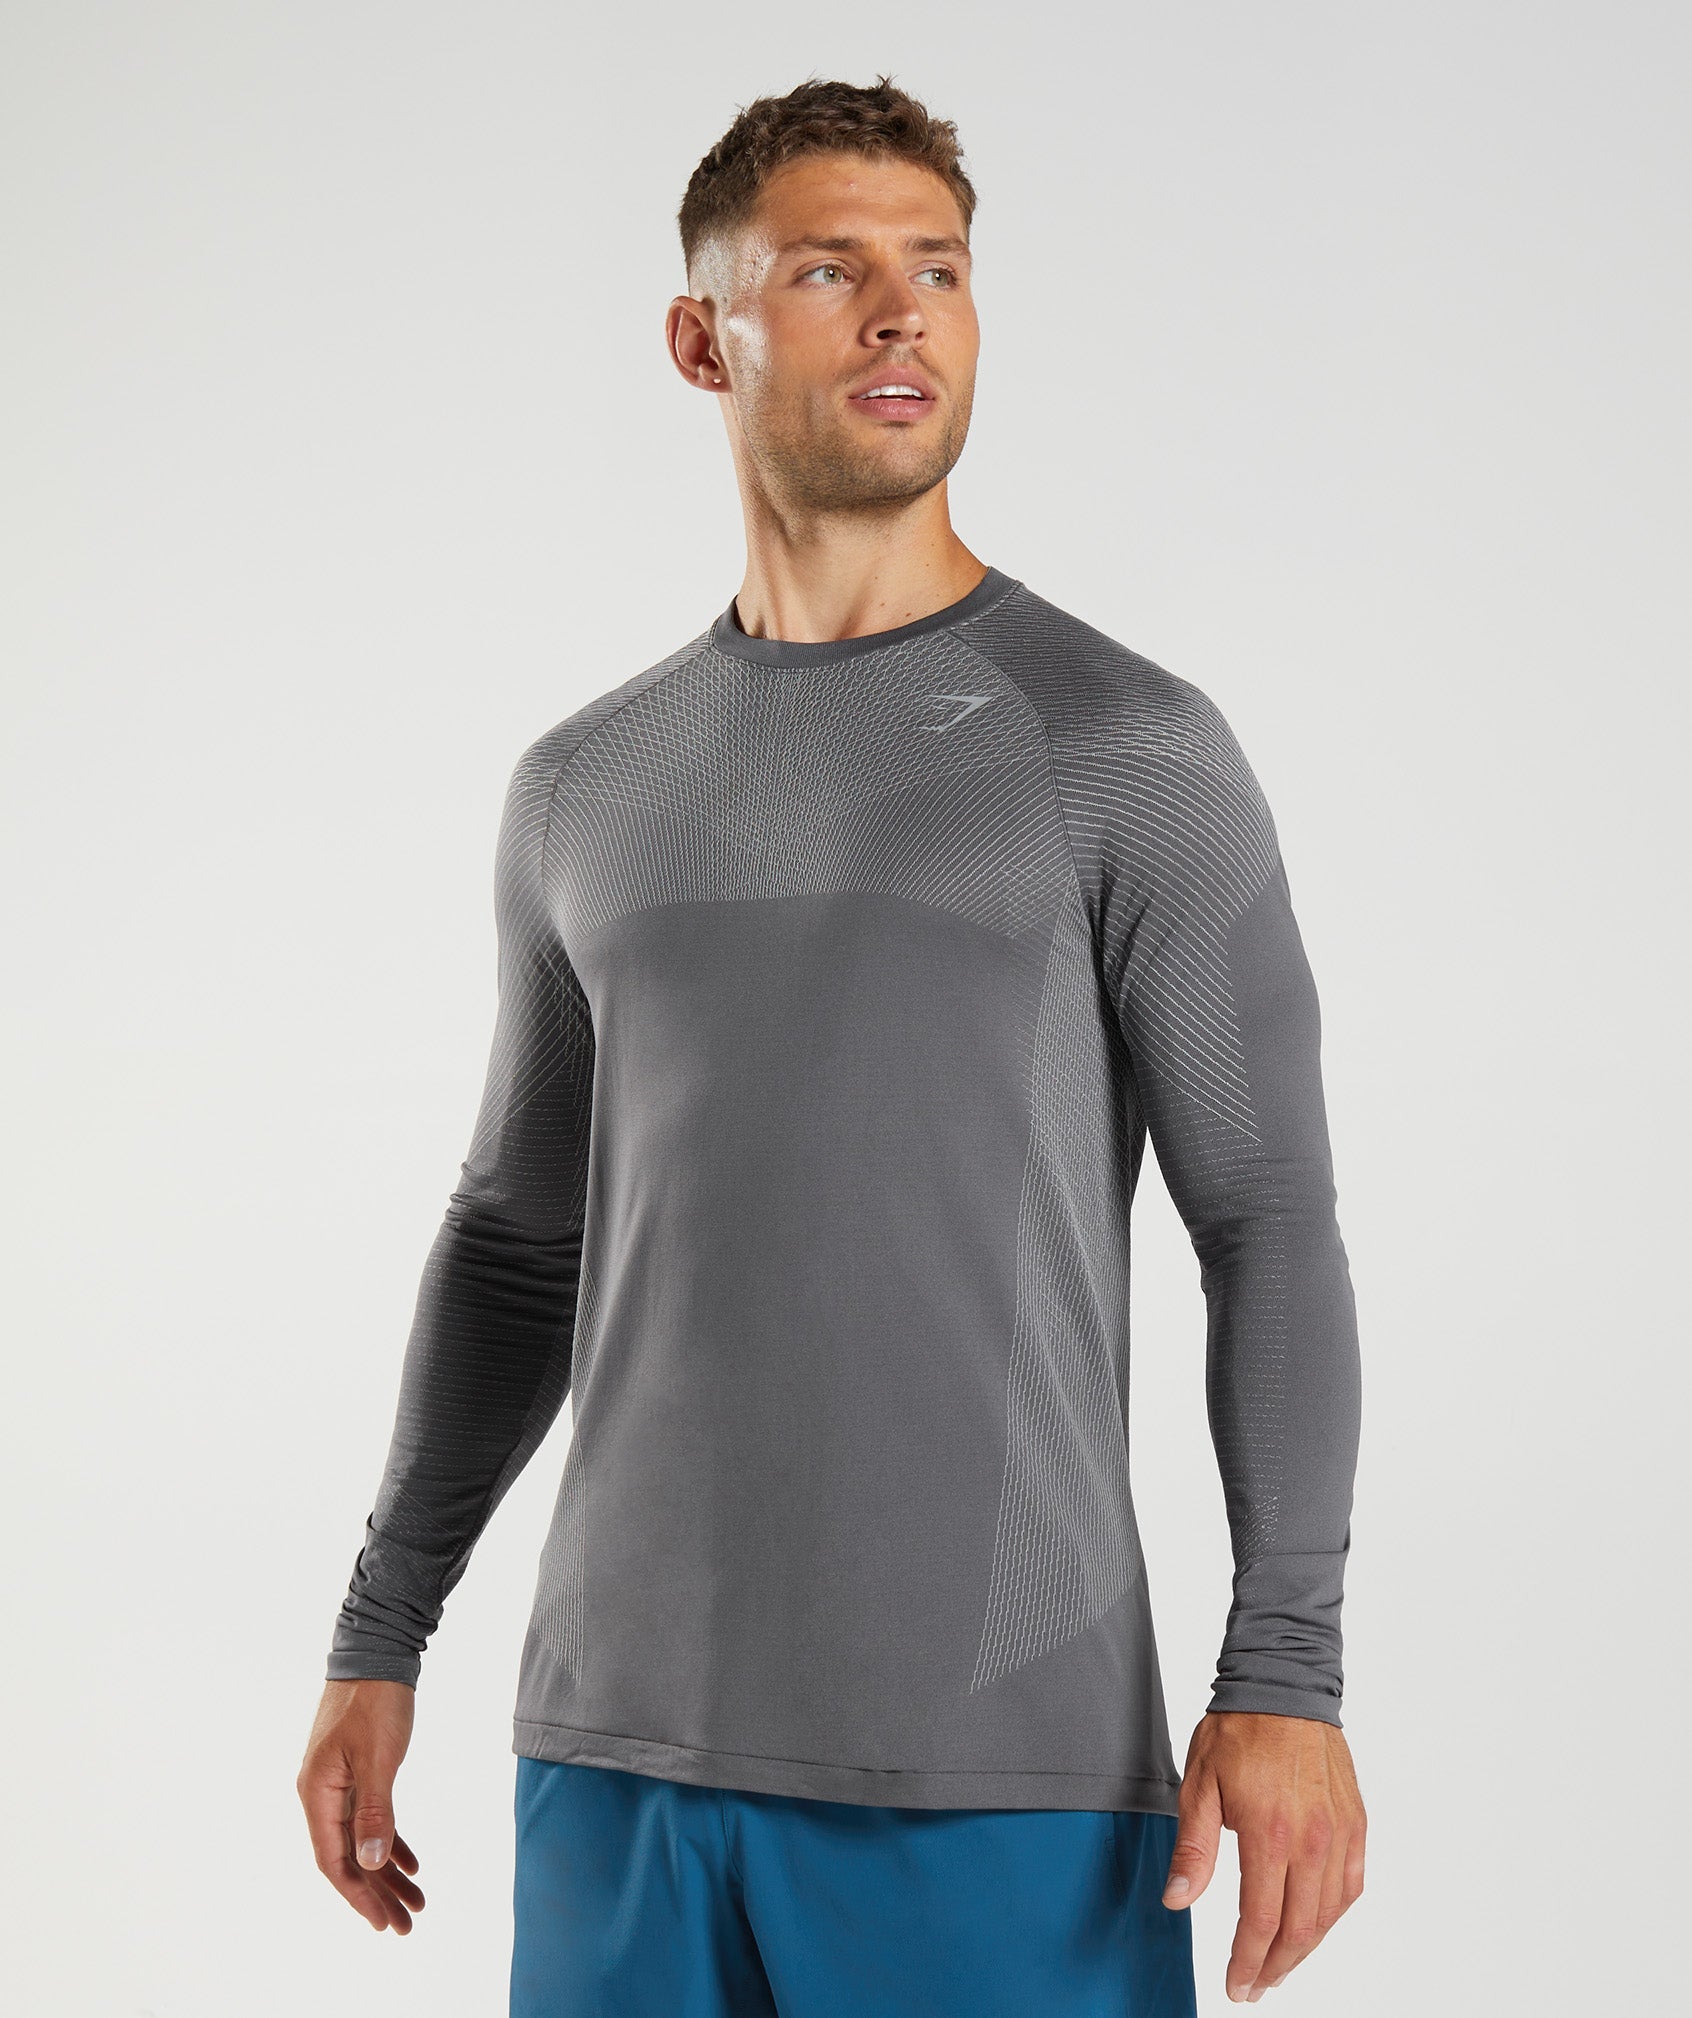 Apex Seamless Long Sleeve T-Shirt in Silhouette Grey/Smokey Grey